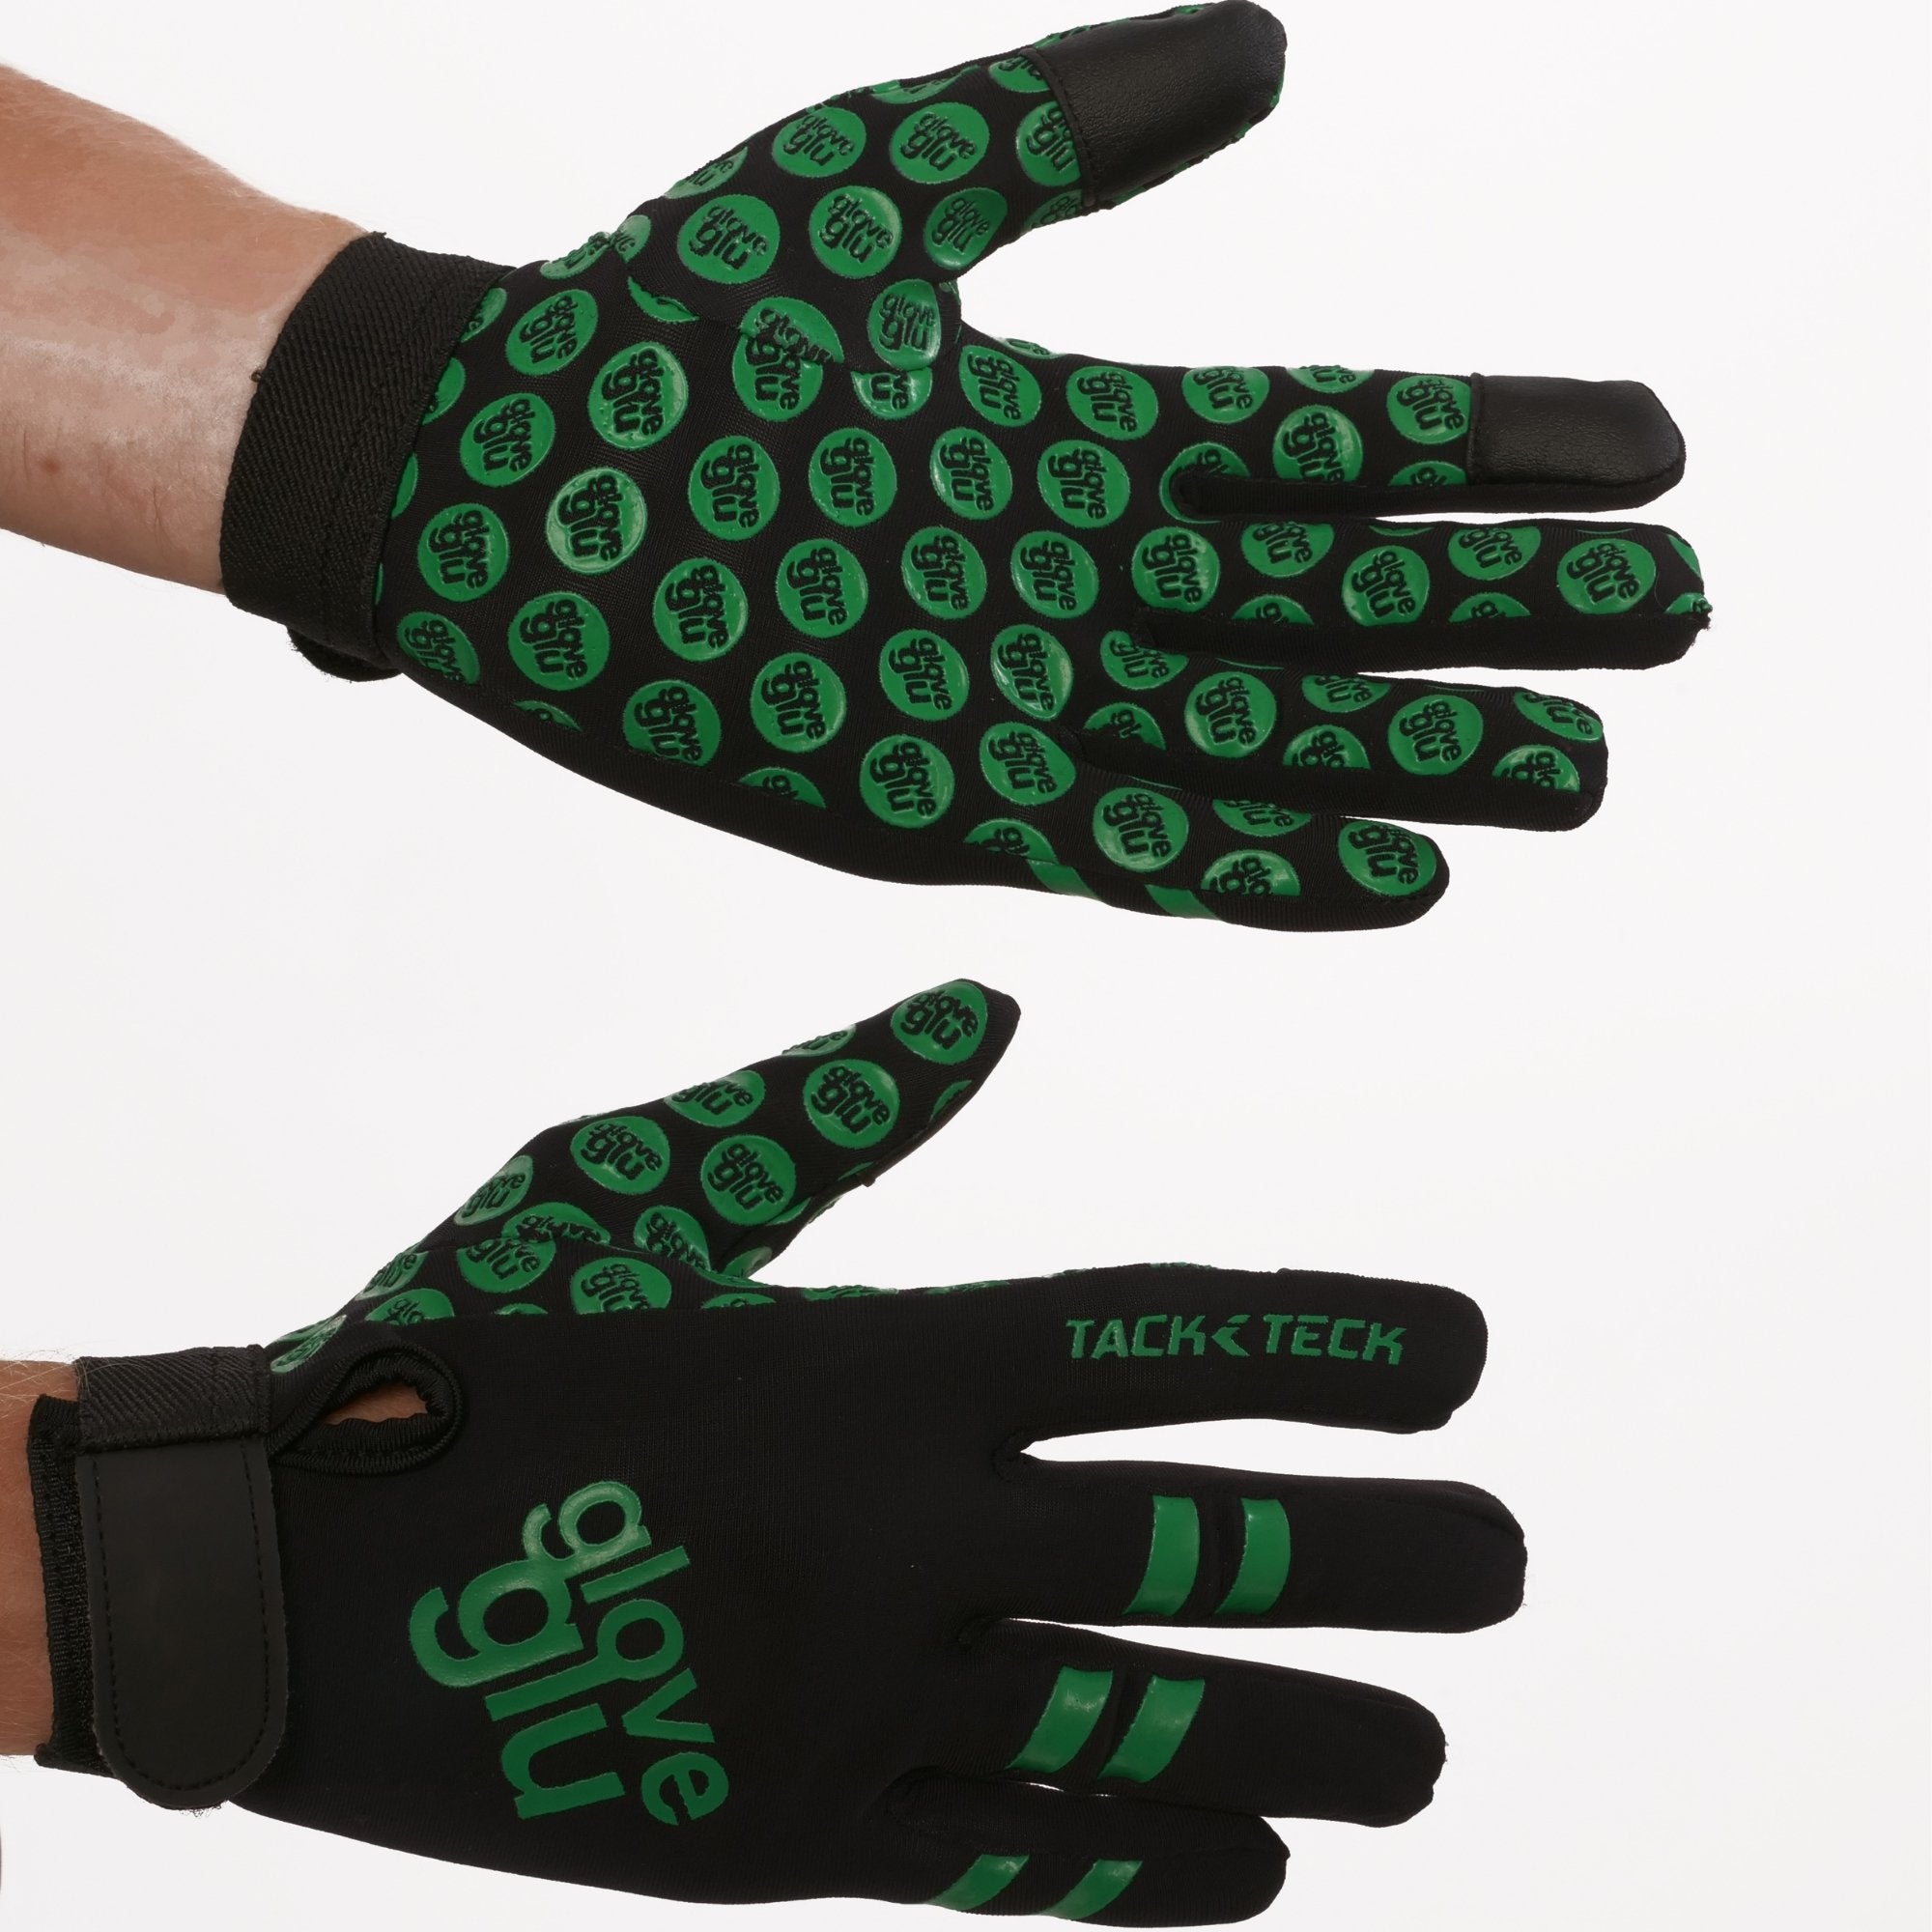 gloveglu glove glue glove care system goalkeeping Qatar